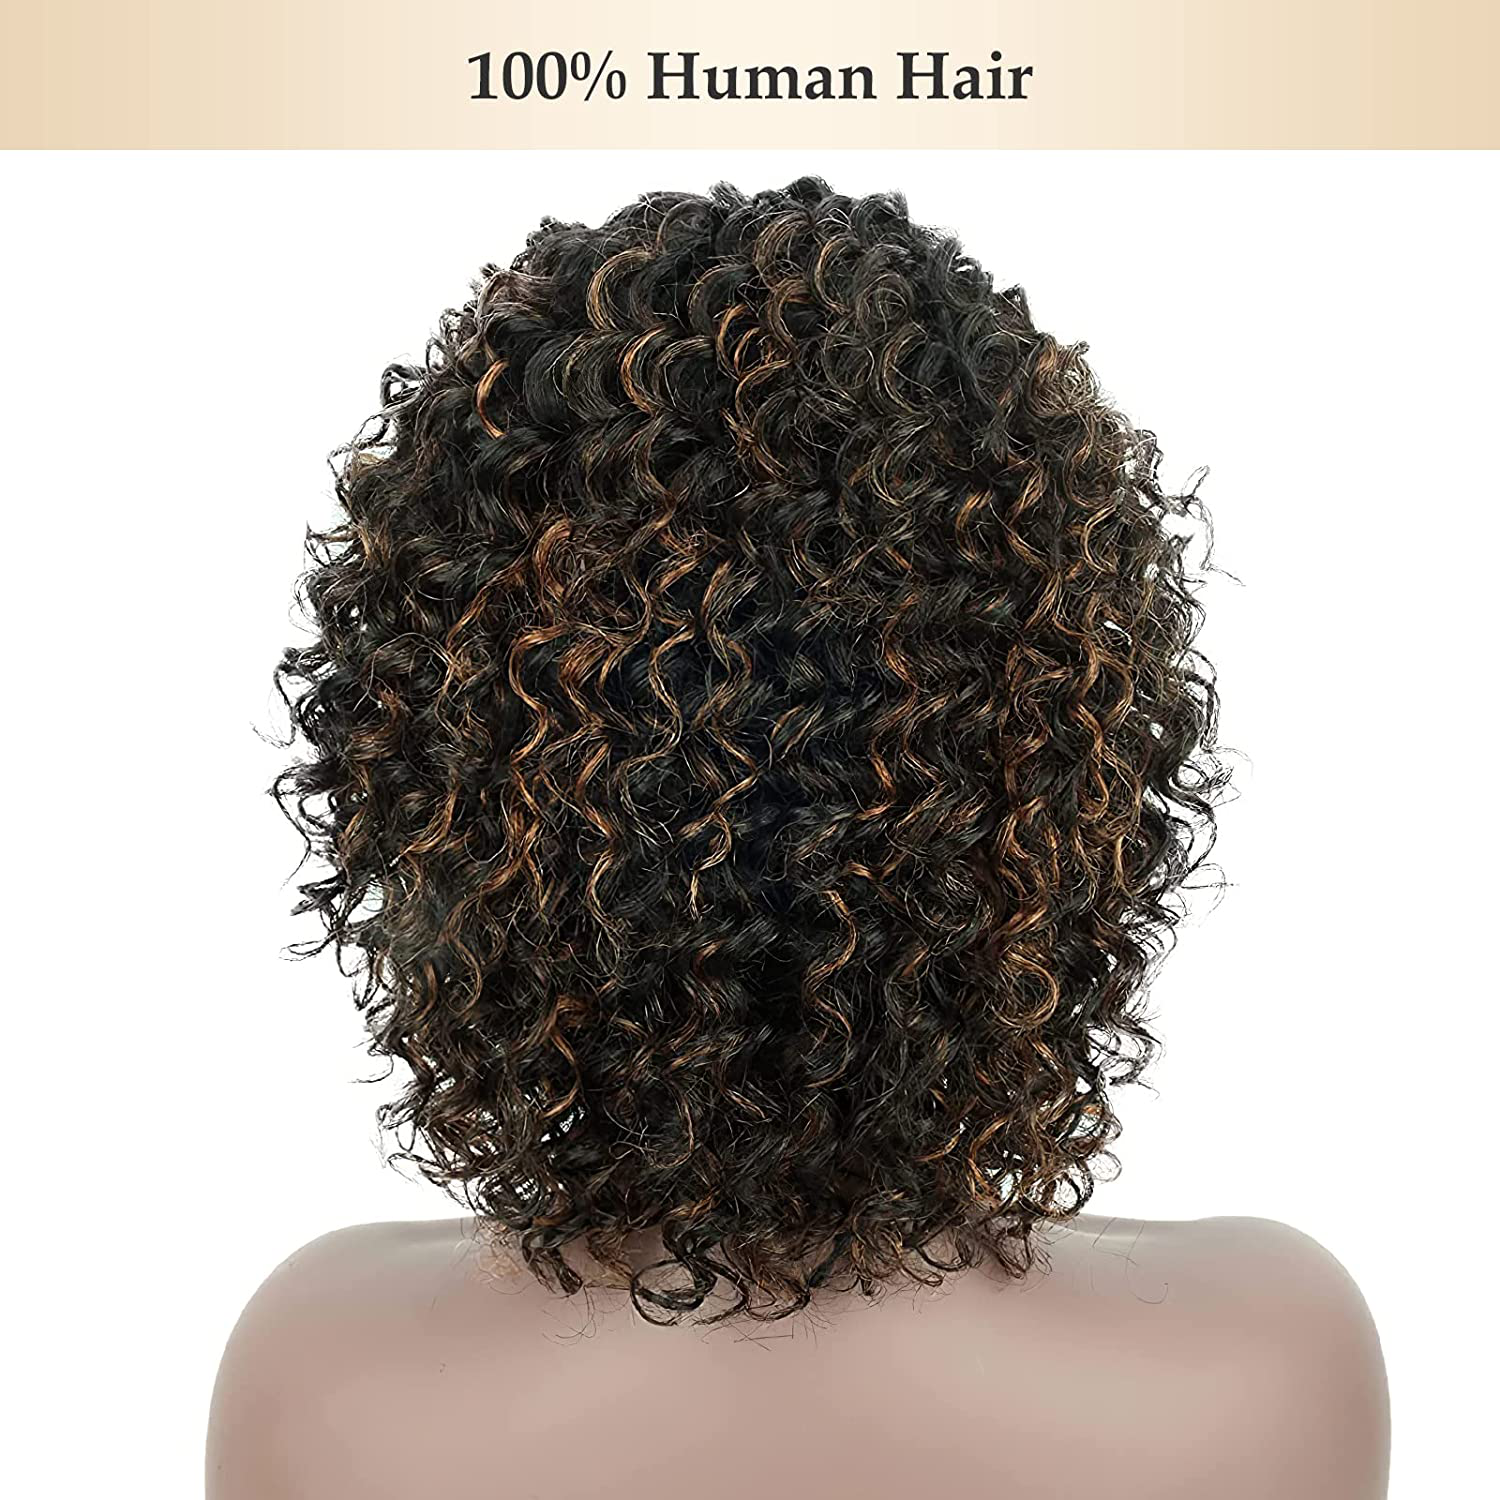 Short Black Brown Highlights Full Human Hair Wig with Hair Bangs